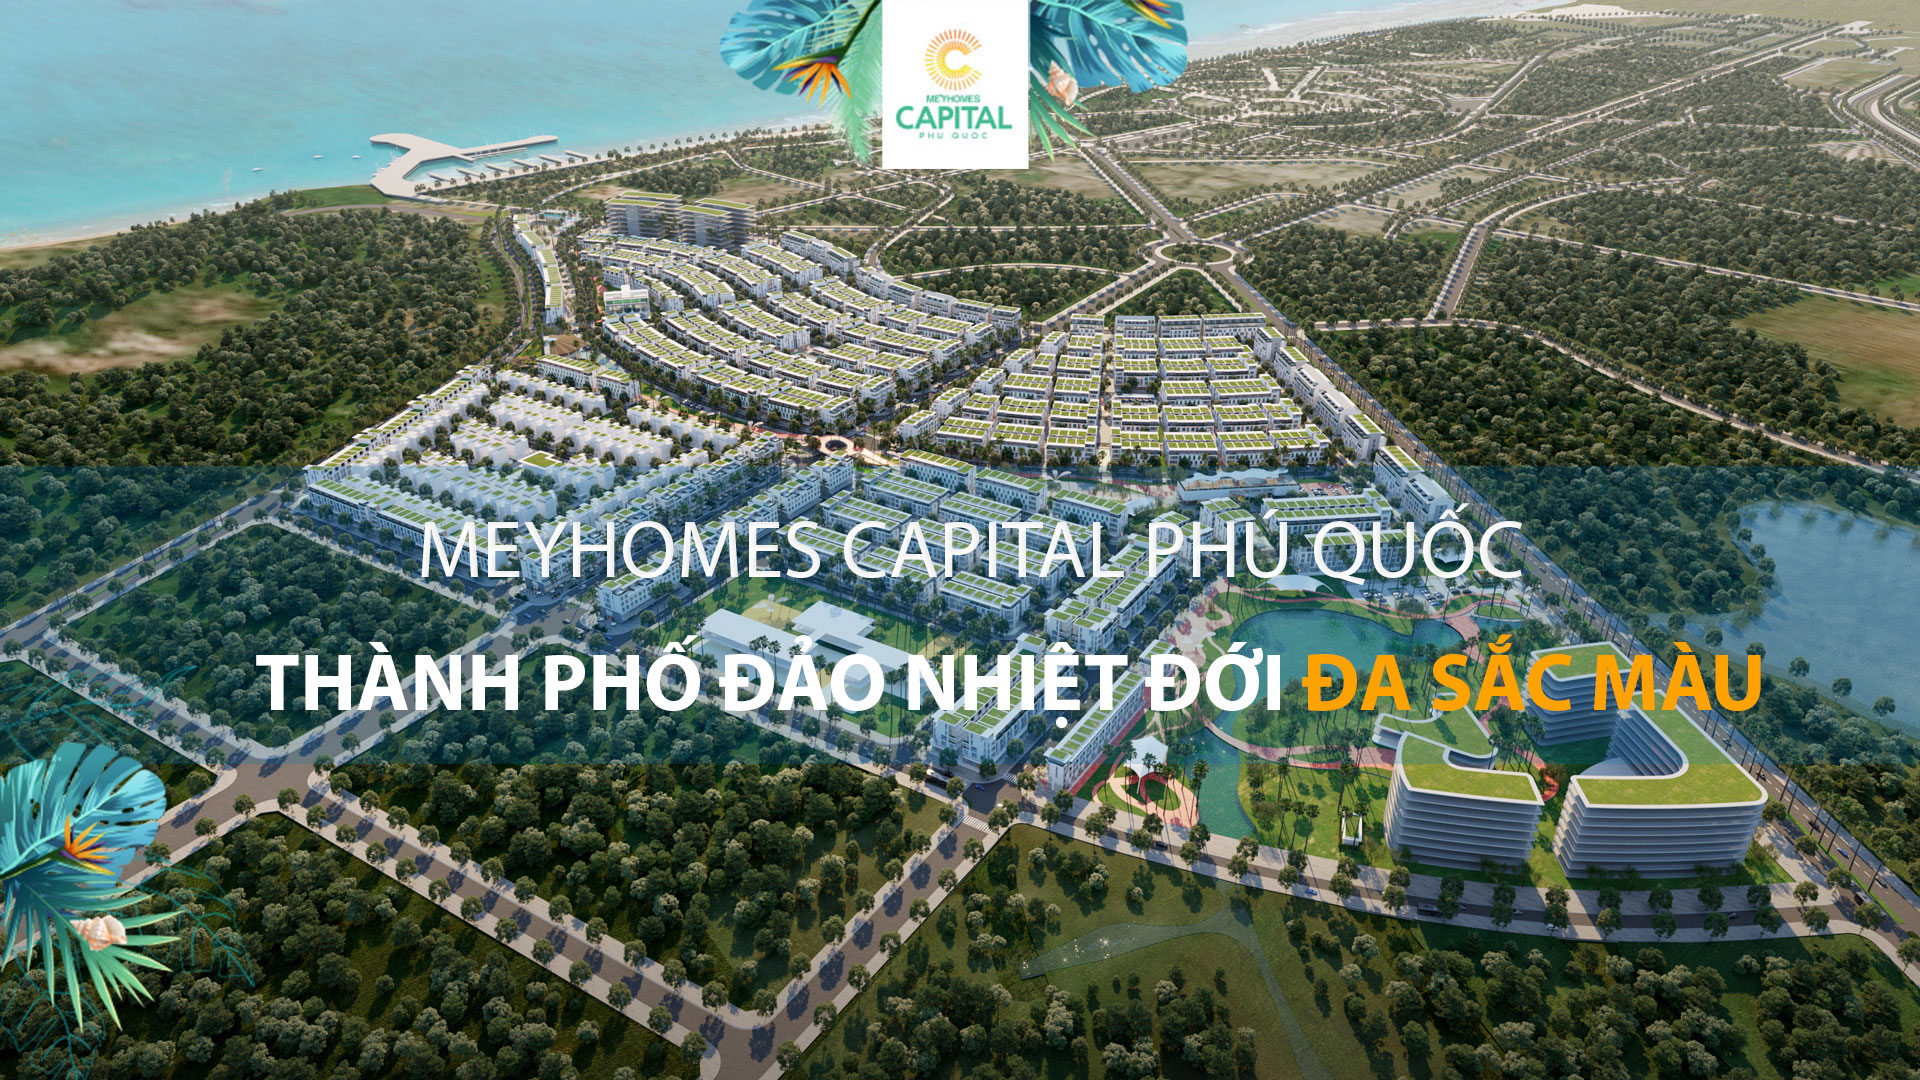 Meyhomes-capital-Phu-Quoc-slide-3